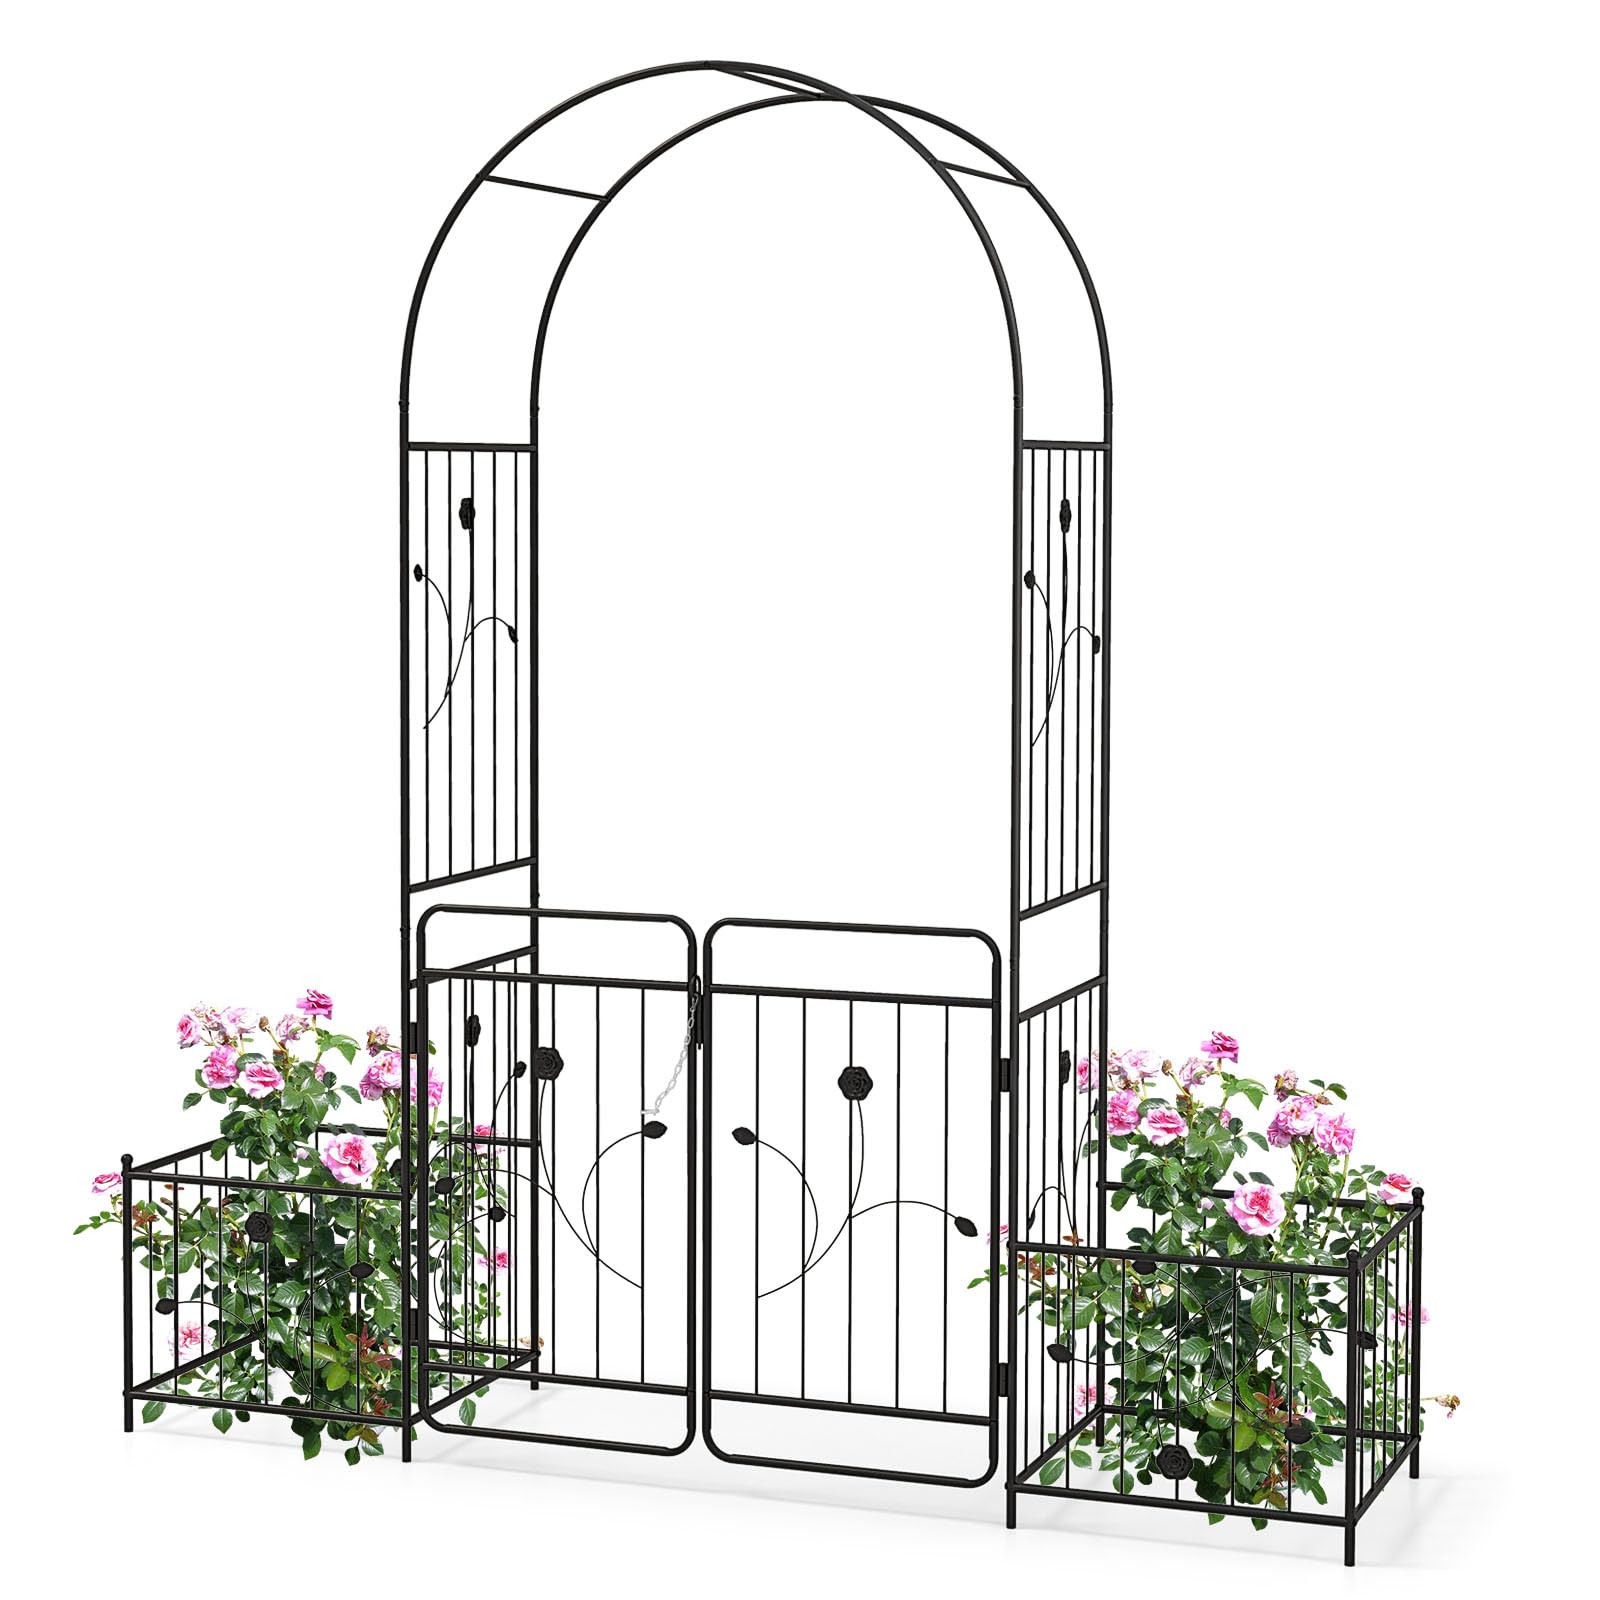 Giantex Garden Arch with Planter - 87 inch Metal Garden Arbor with Gate